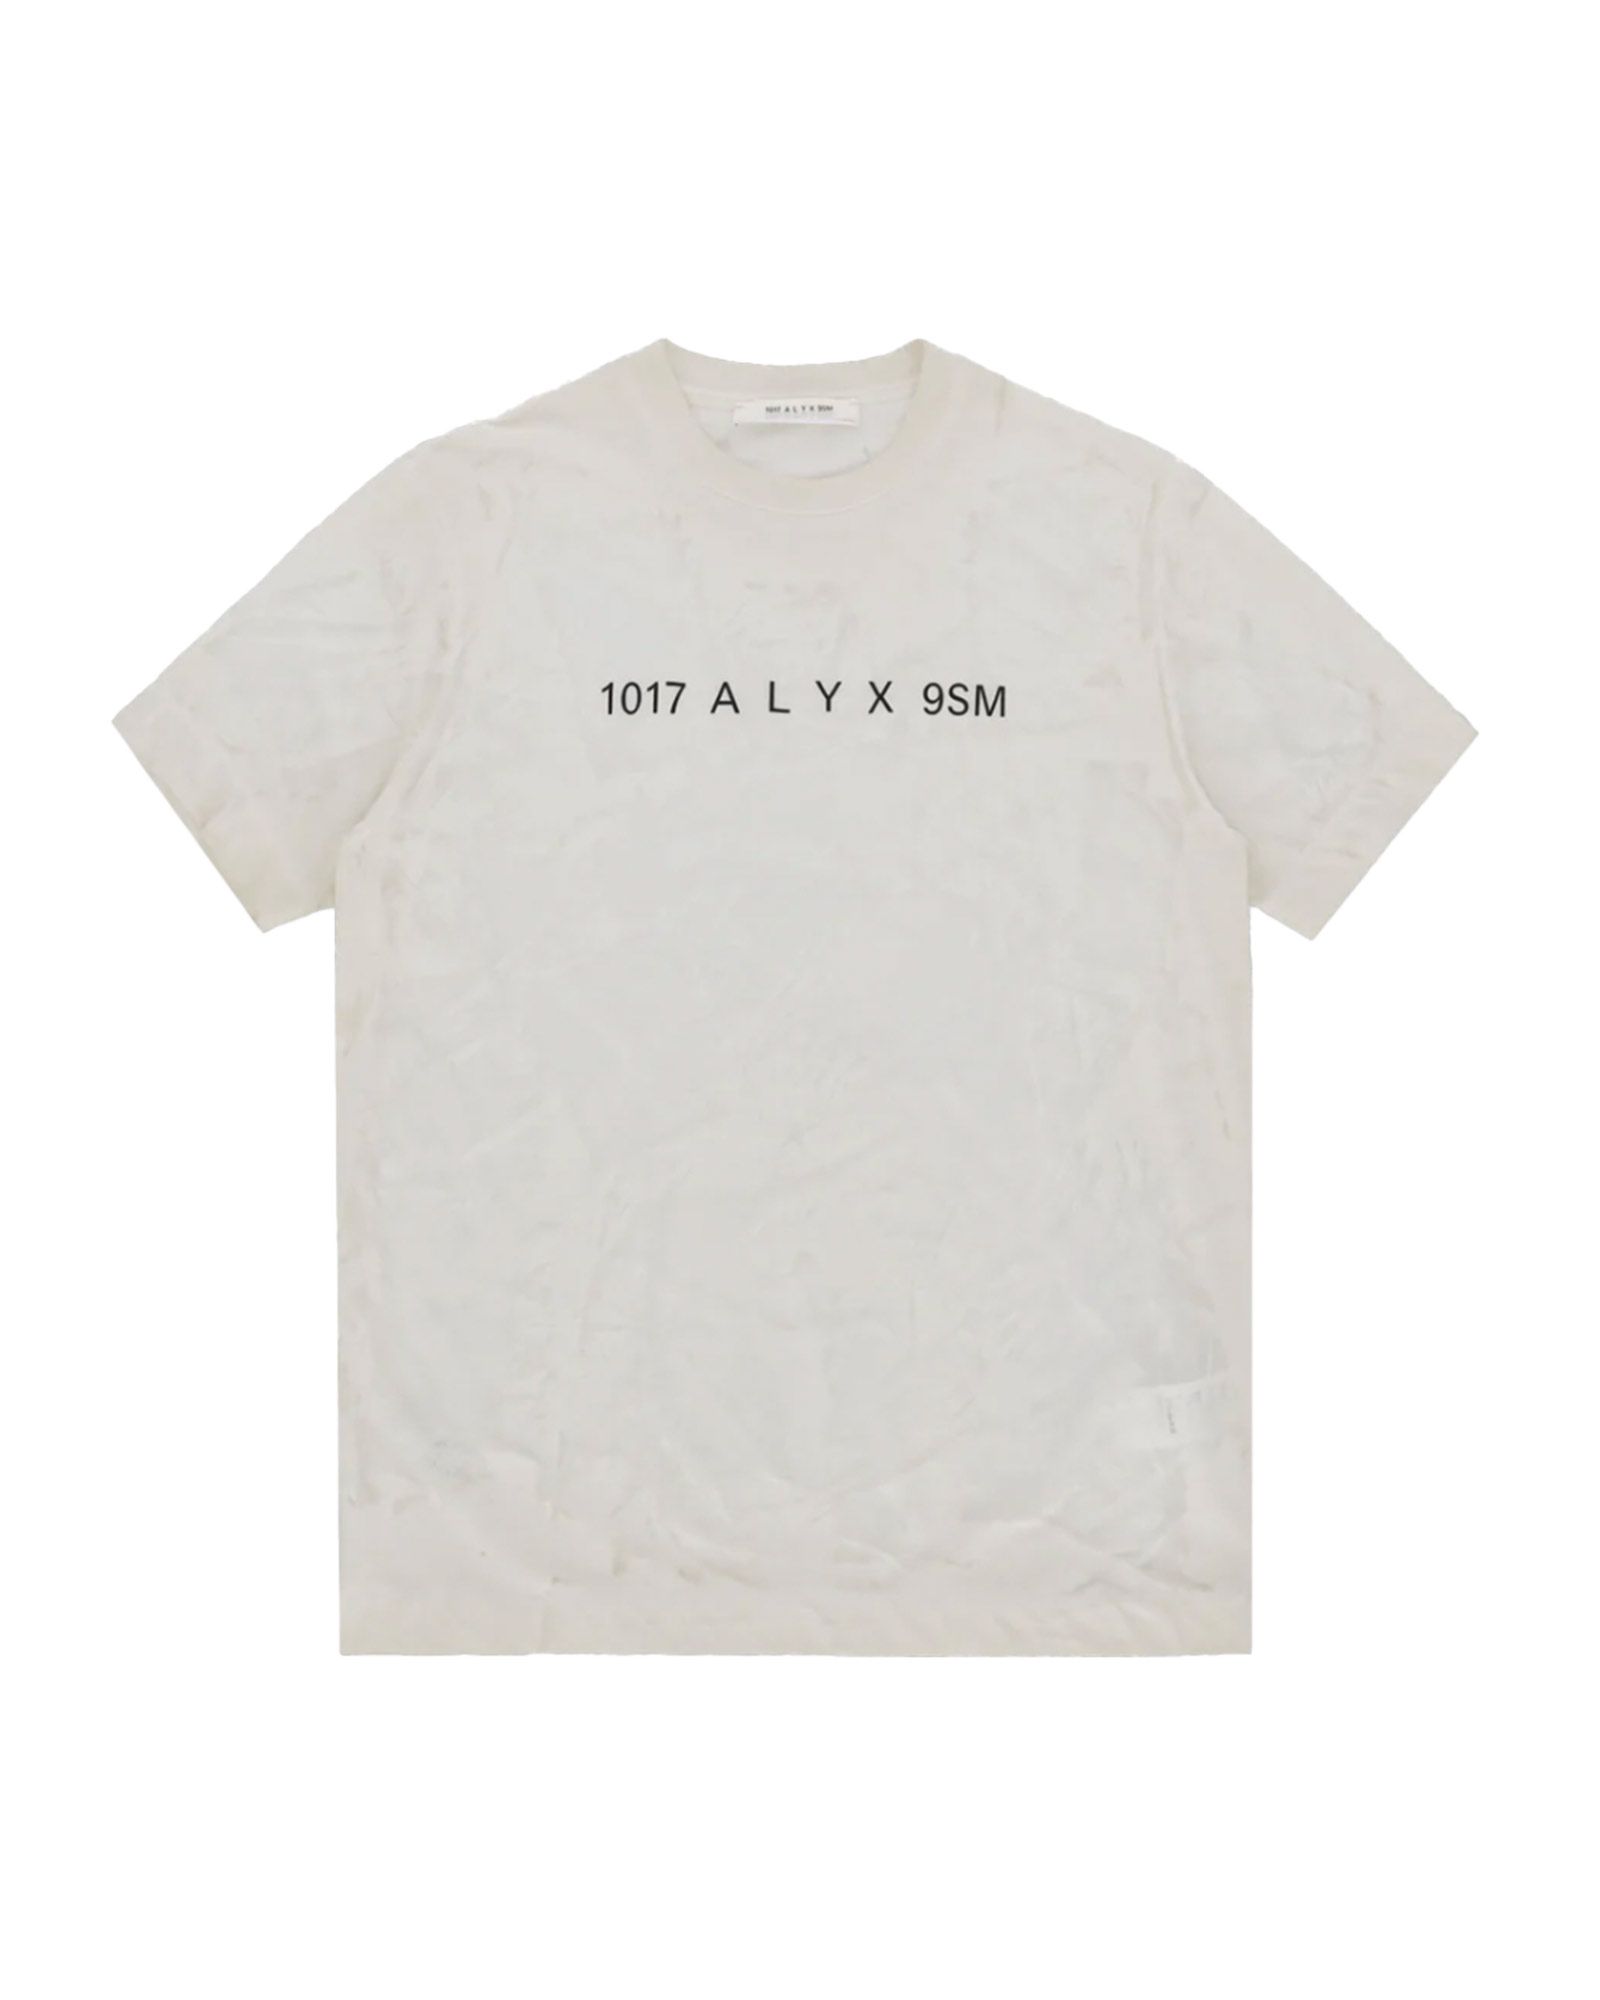 1017 ALYX 9SM - TRANSLUCENT GRAPHIC S/S T-SHIRT (Tシャツ) Off ...